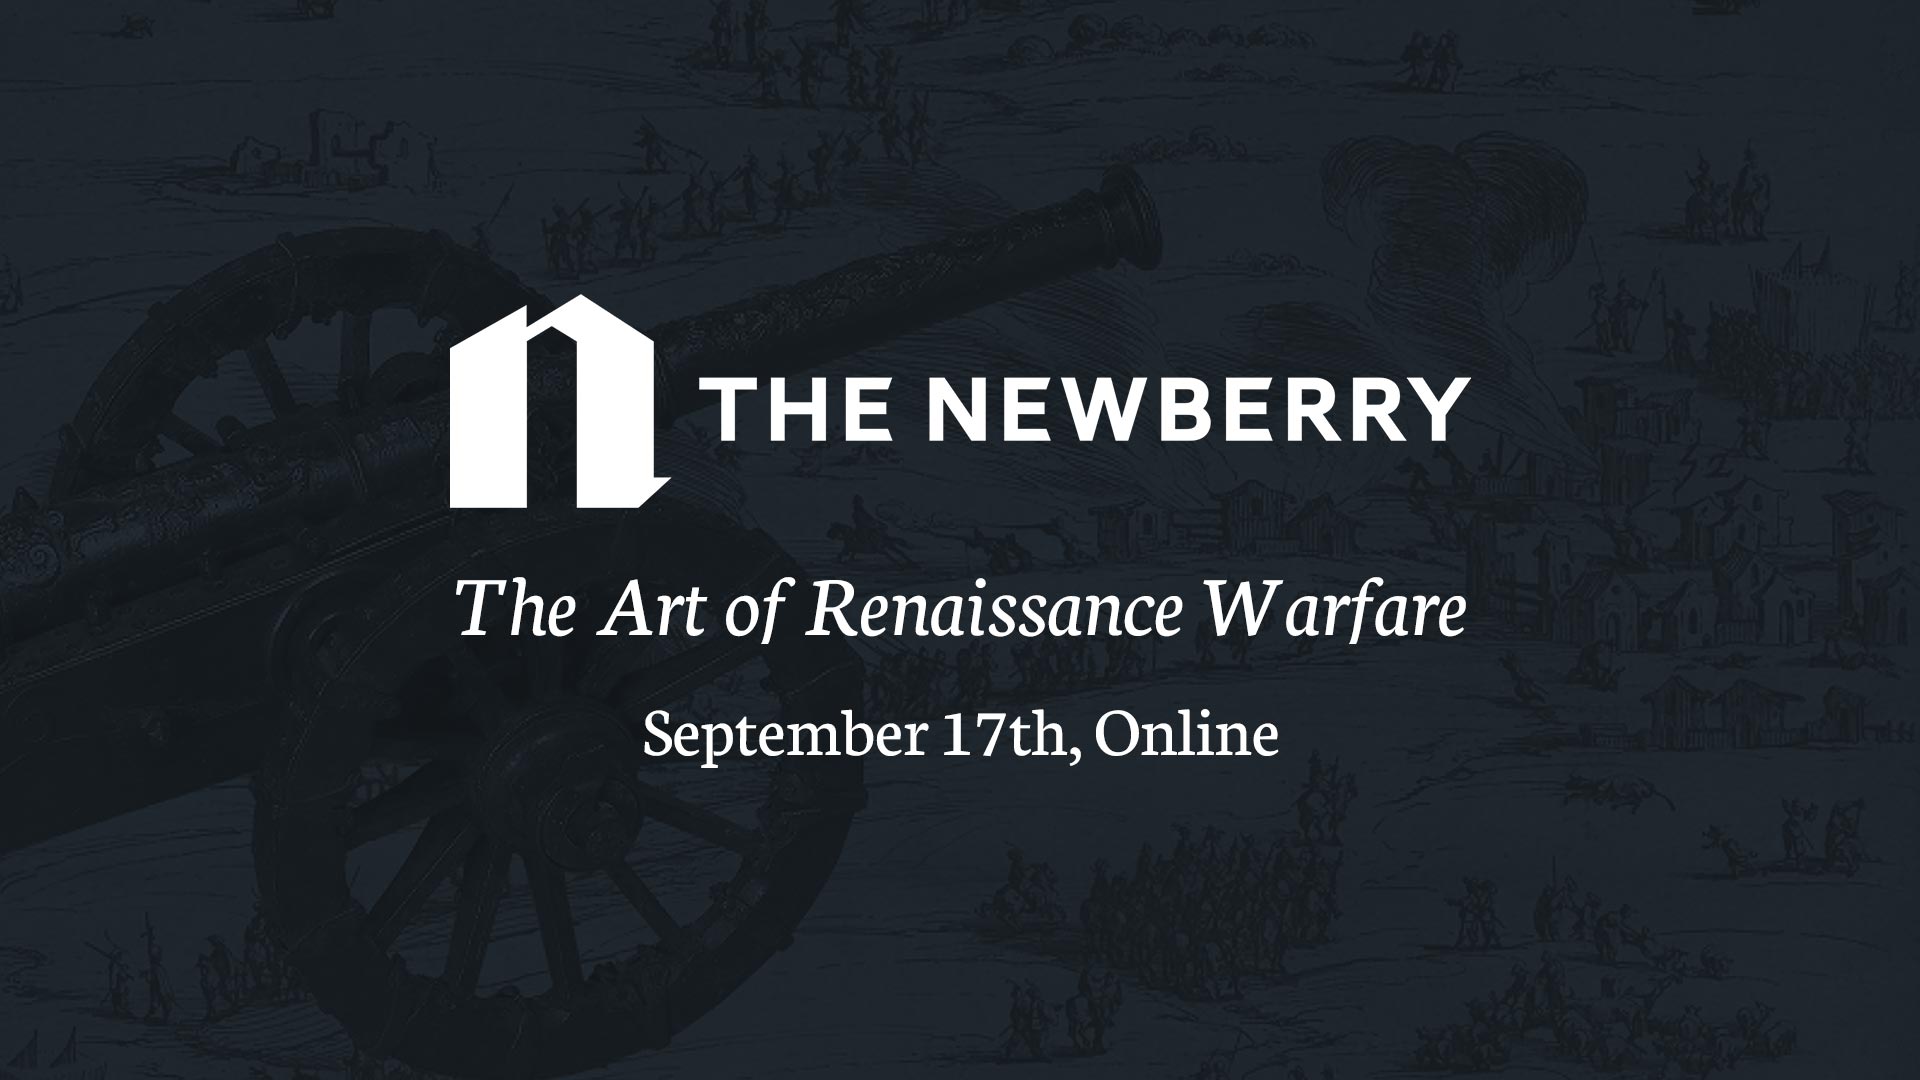 Upcoming “Art of Renaissance Warfare” Talk by The Newberry